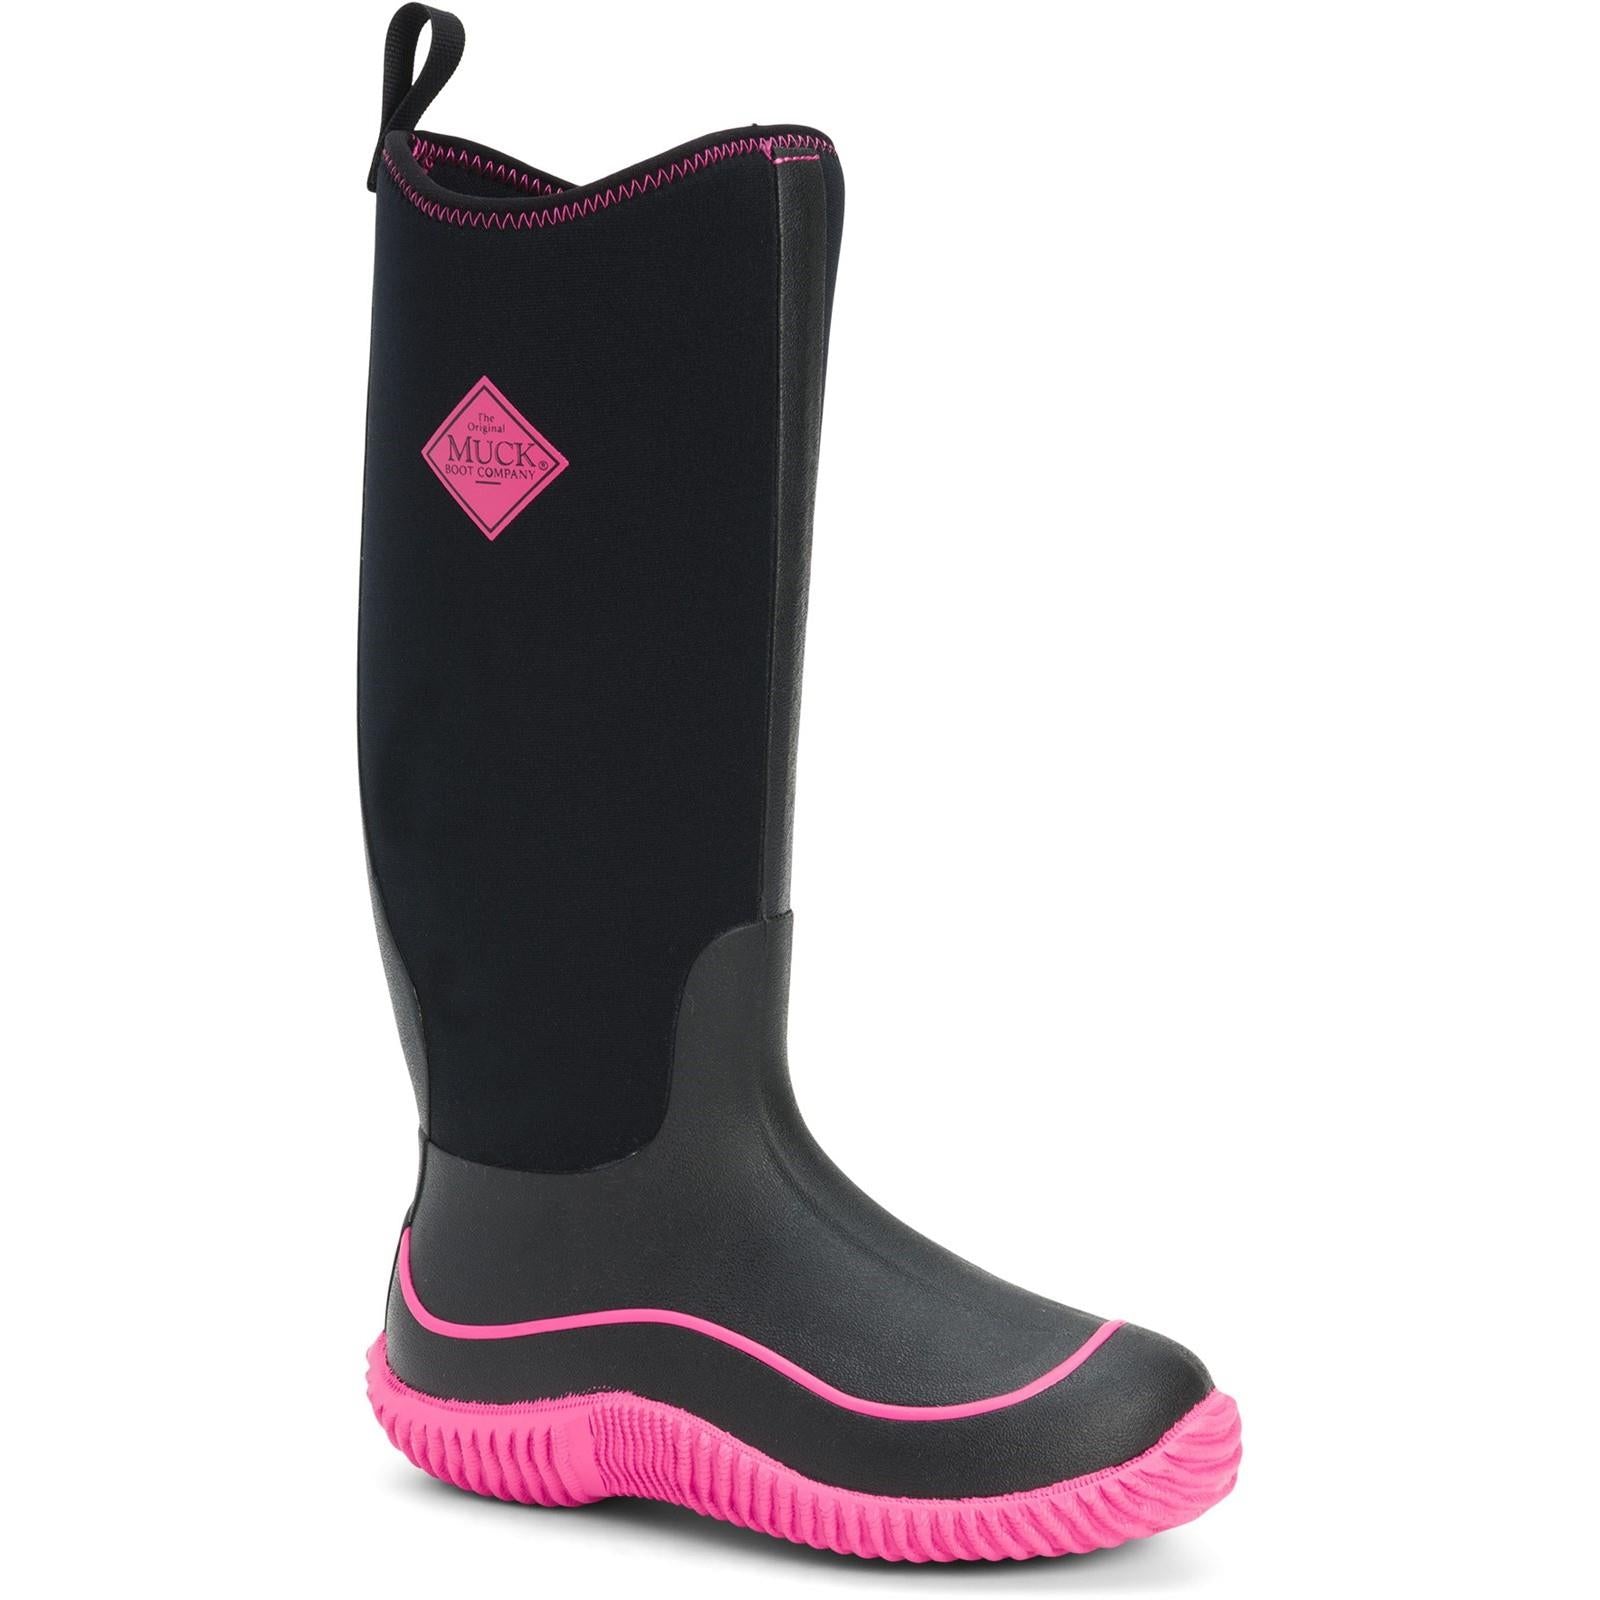 Muck Boots Hale ladies black/pink wellington boots